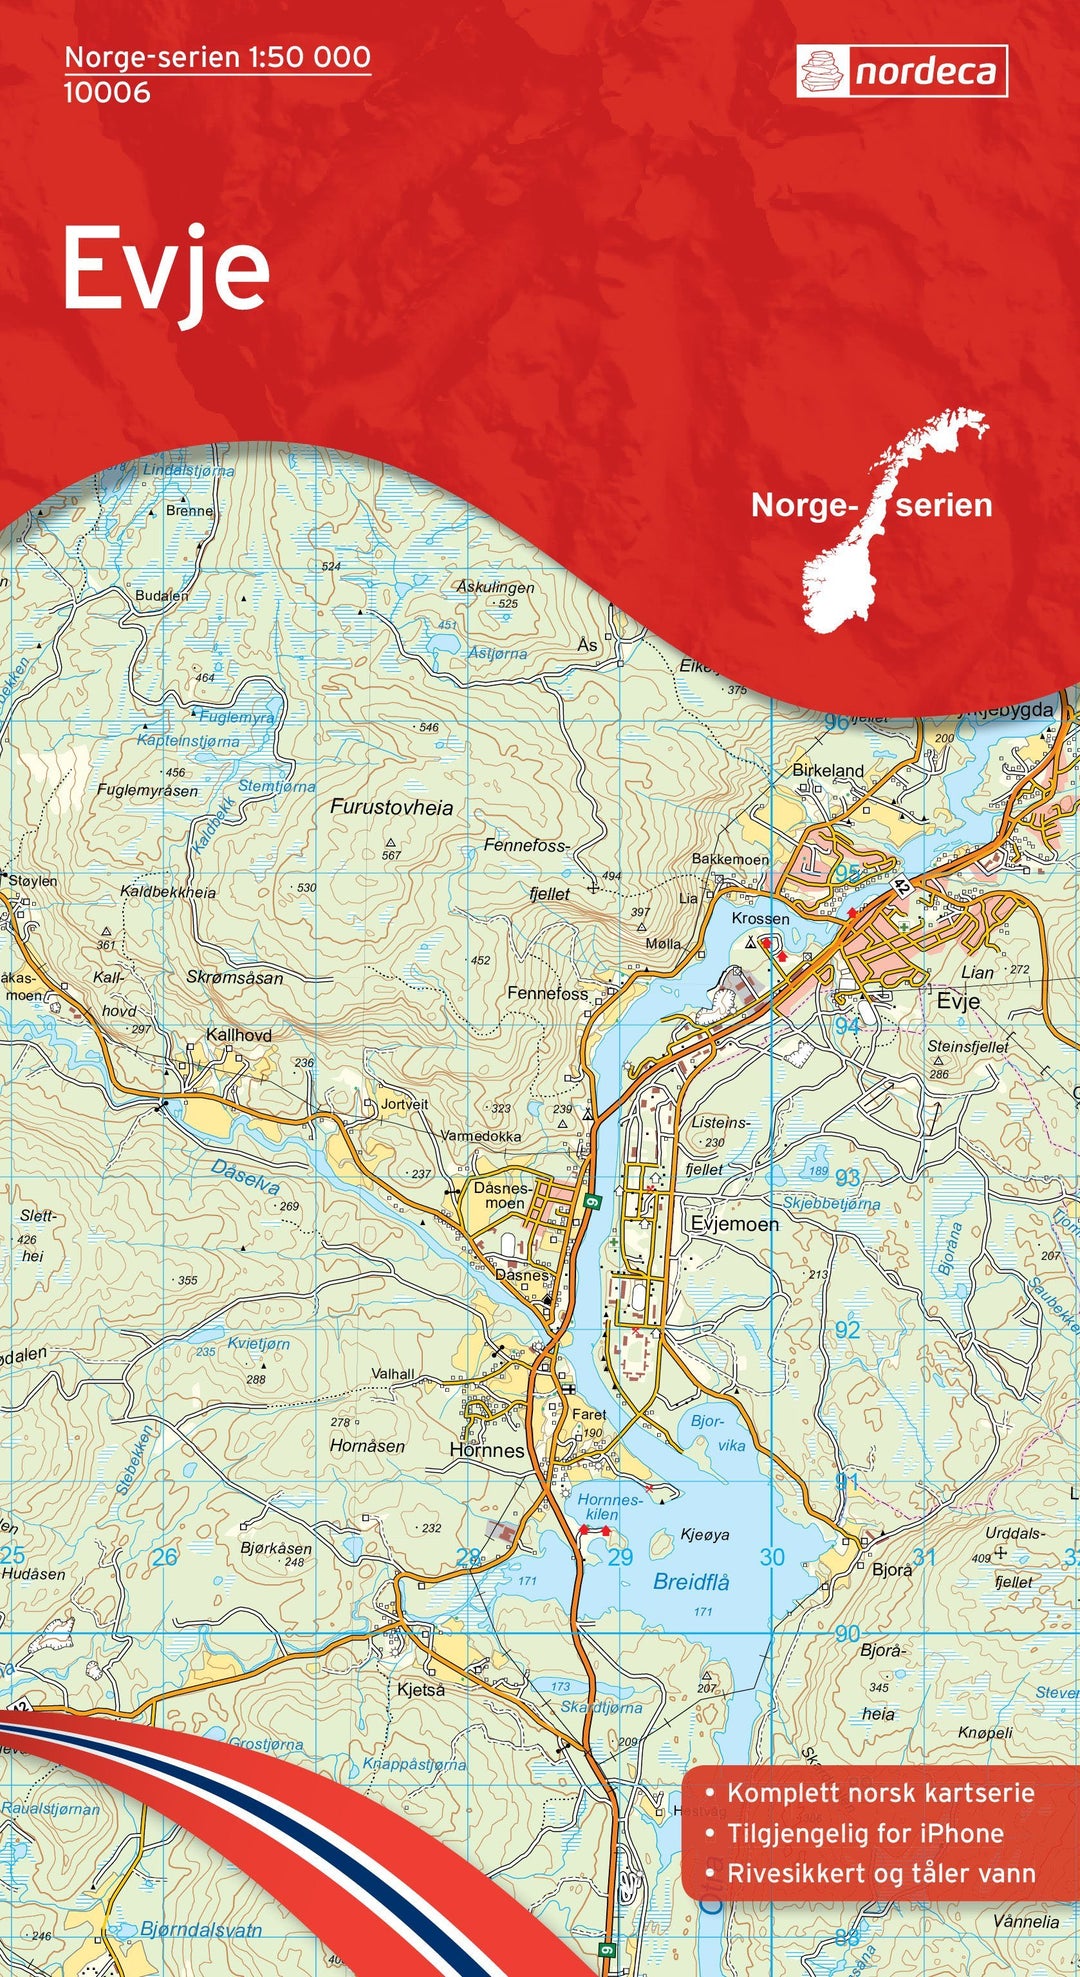 Carte de randonnée n° 10006 - Evje (Norvège) | Nordeca - Norge-serien carte pliée Nordeca 